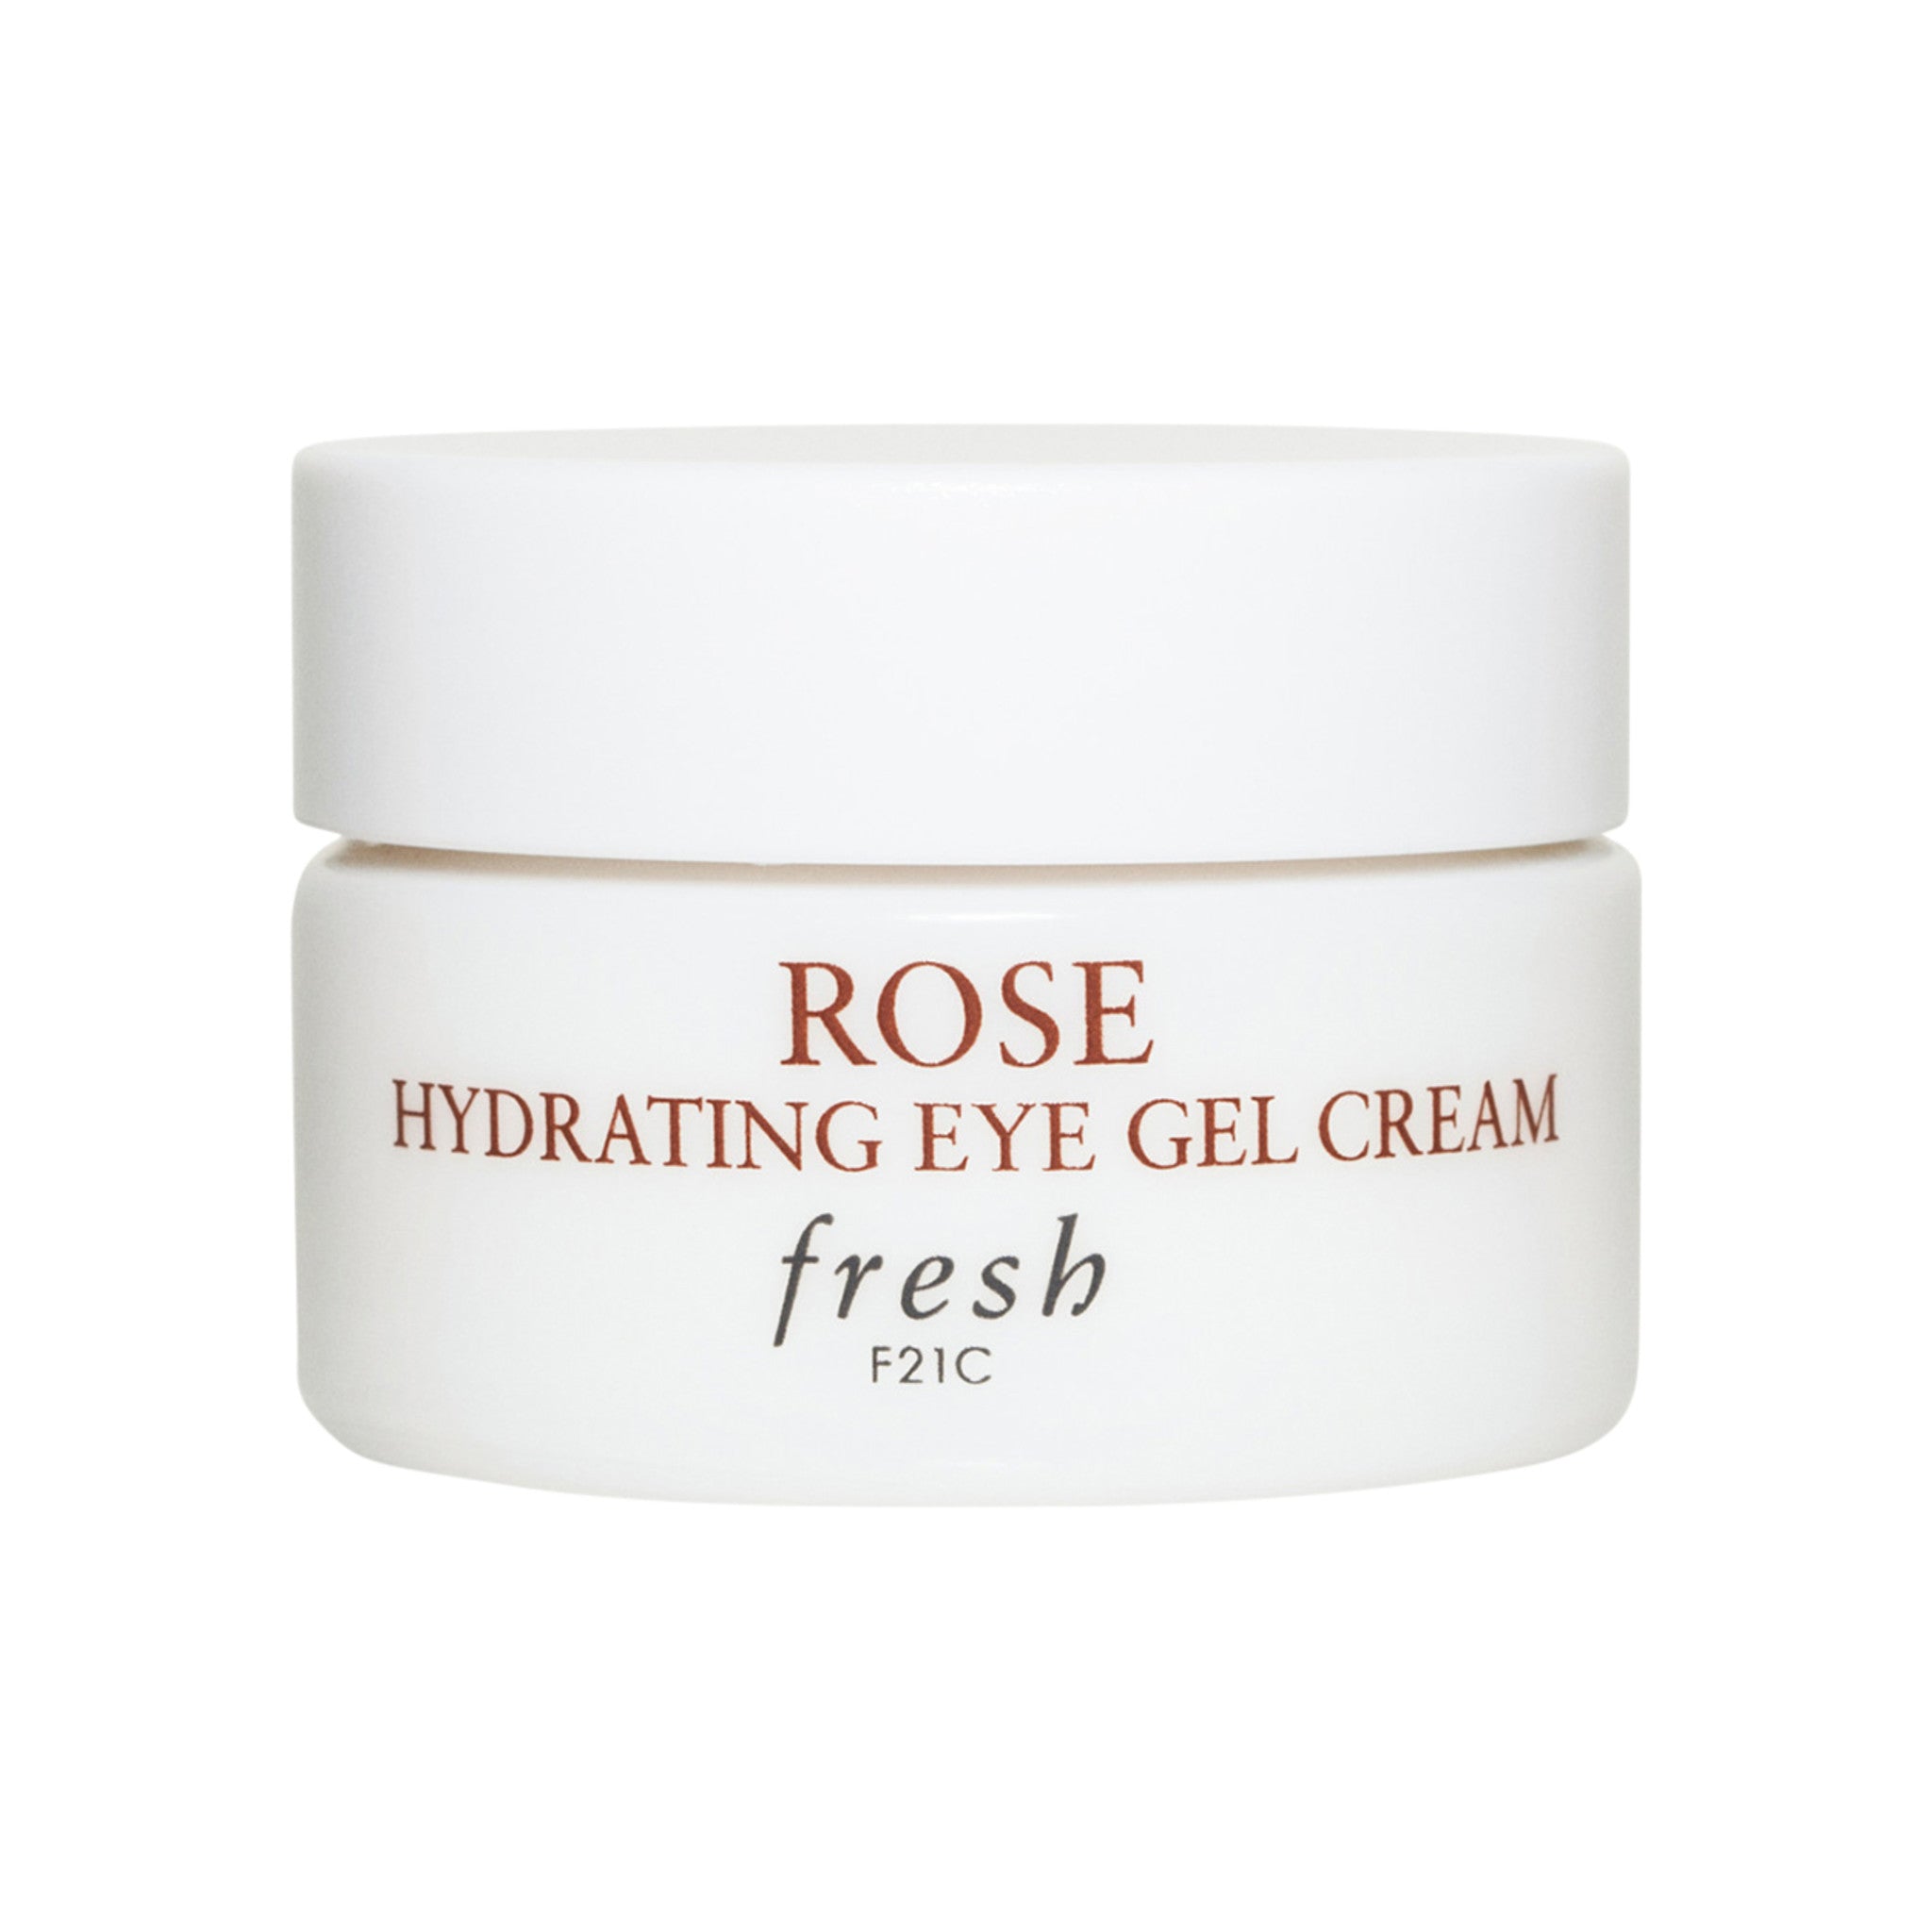 Fresh Rose Hydrating Eye Gel Cream main image.